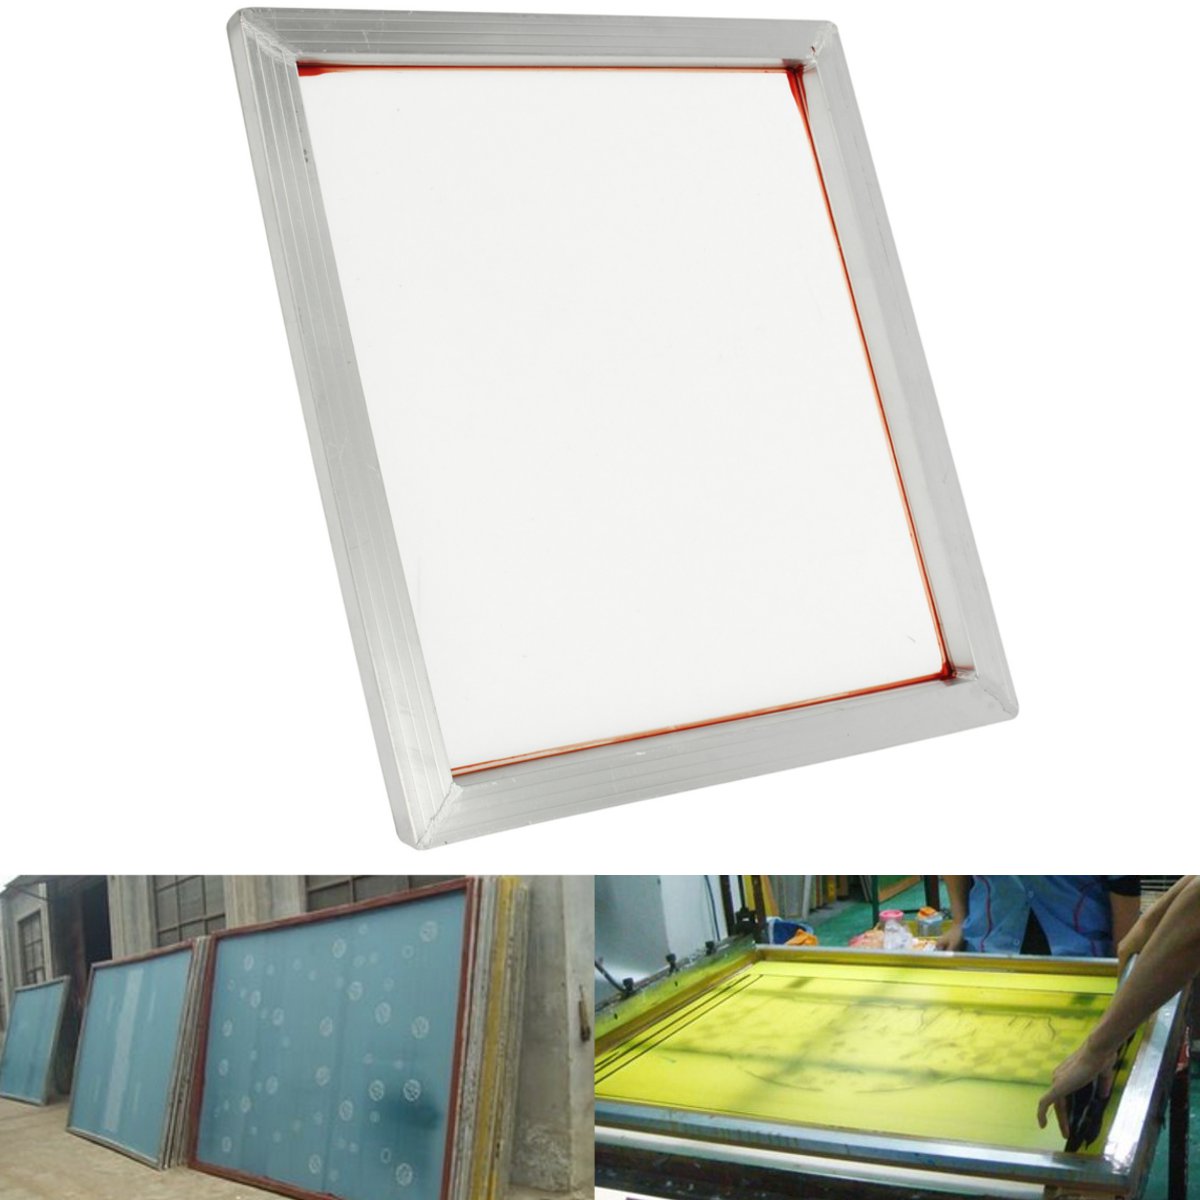 24x20-Aluminum-Silk-Screen-Printing-Press-Screens-Frame-With-230-Mesh-Count-1382447-1